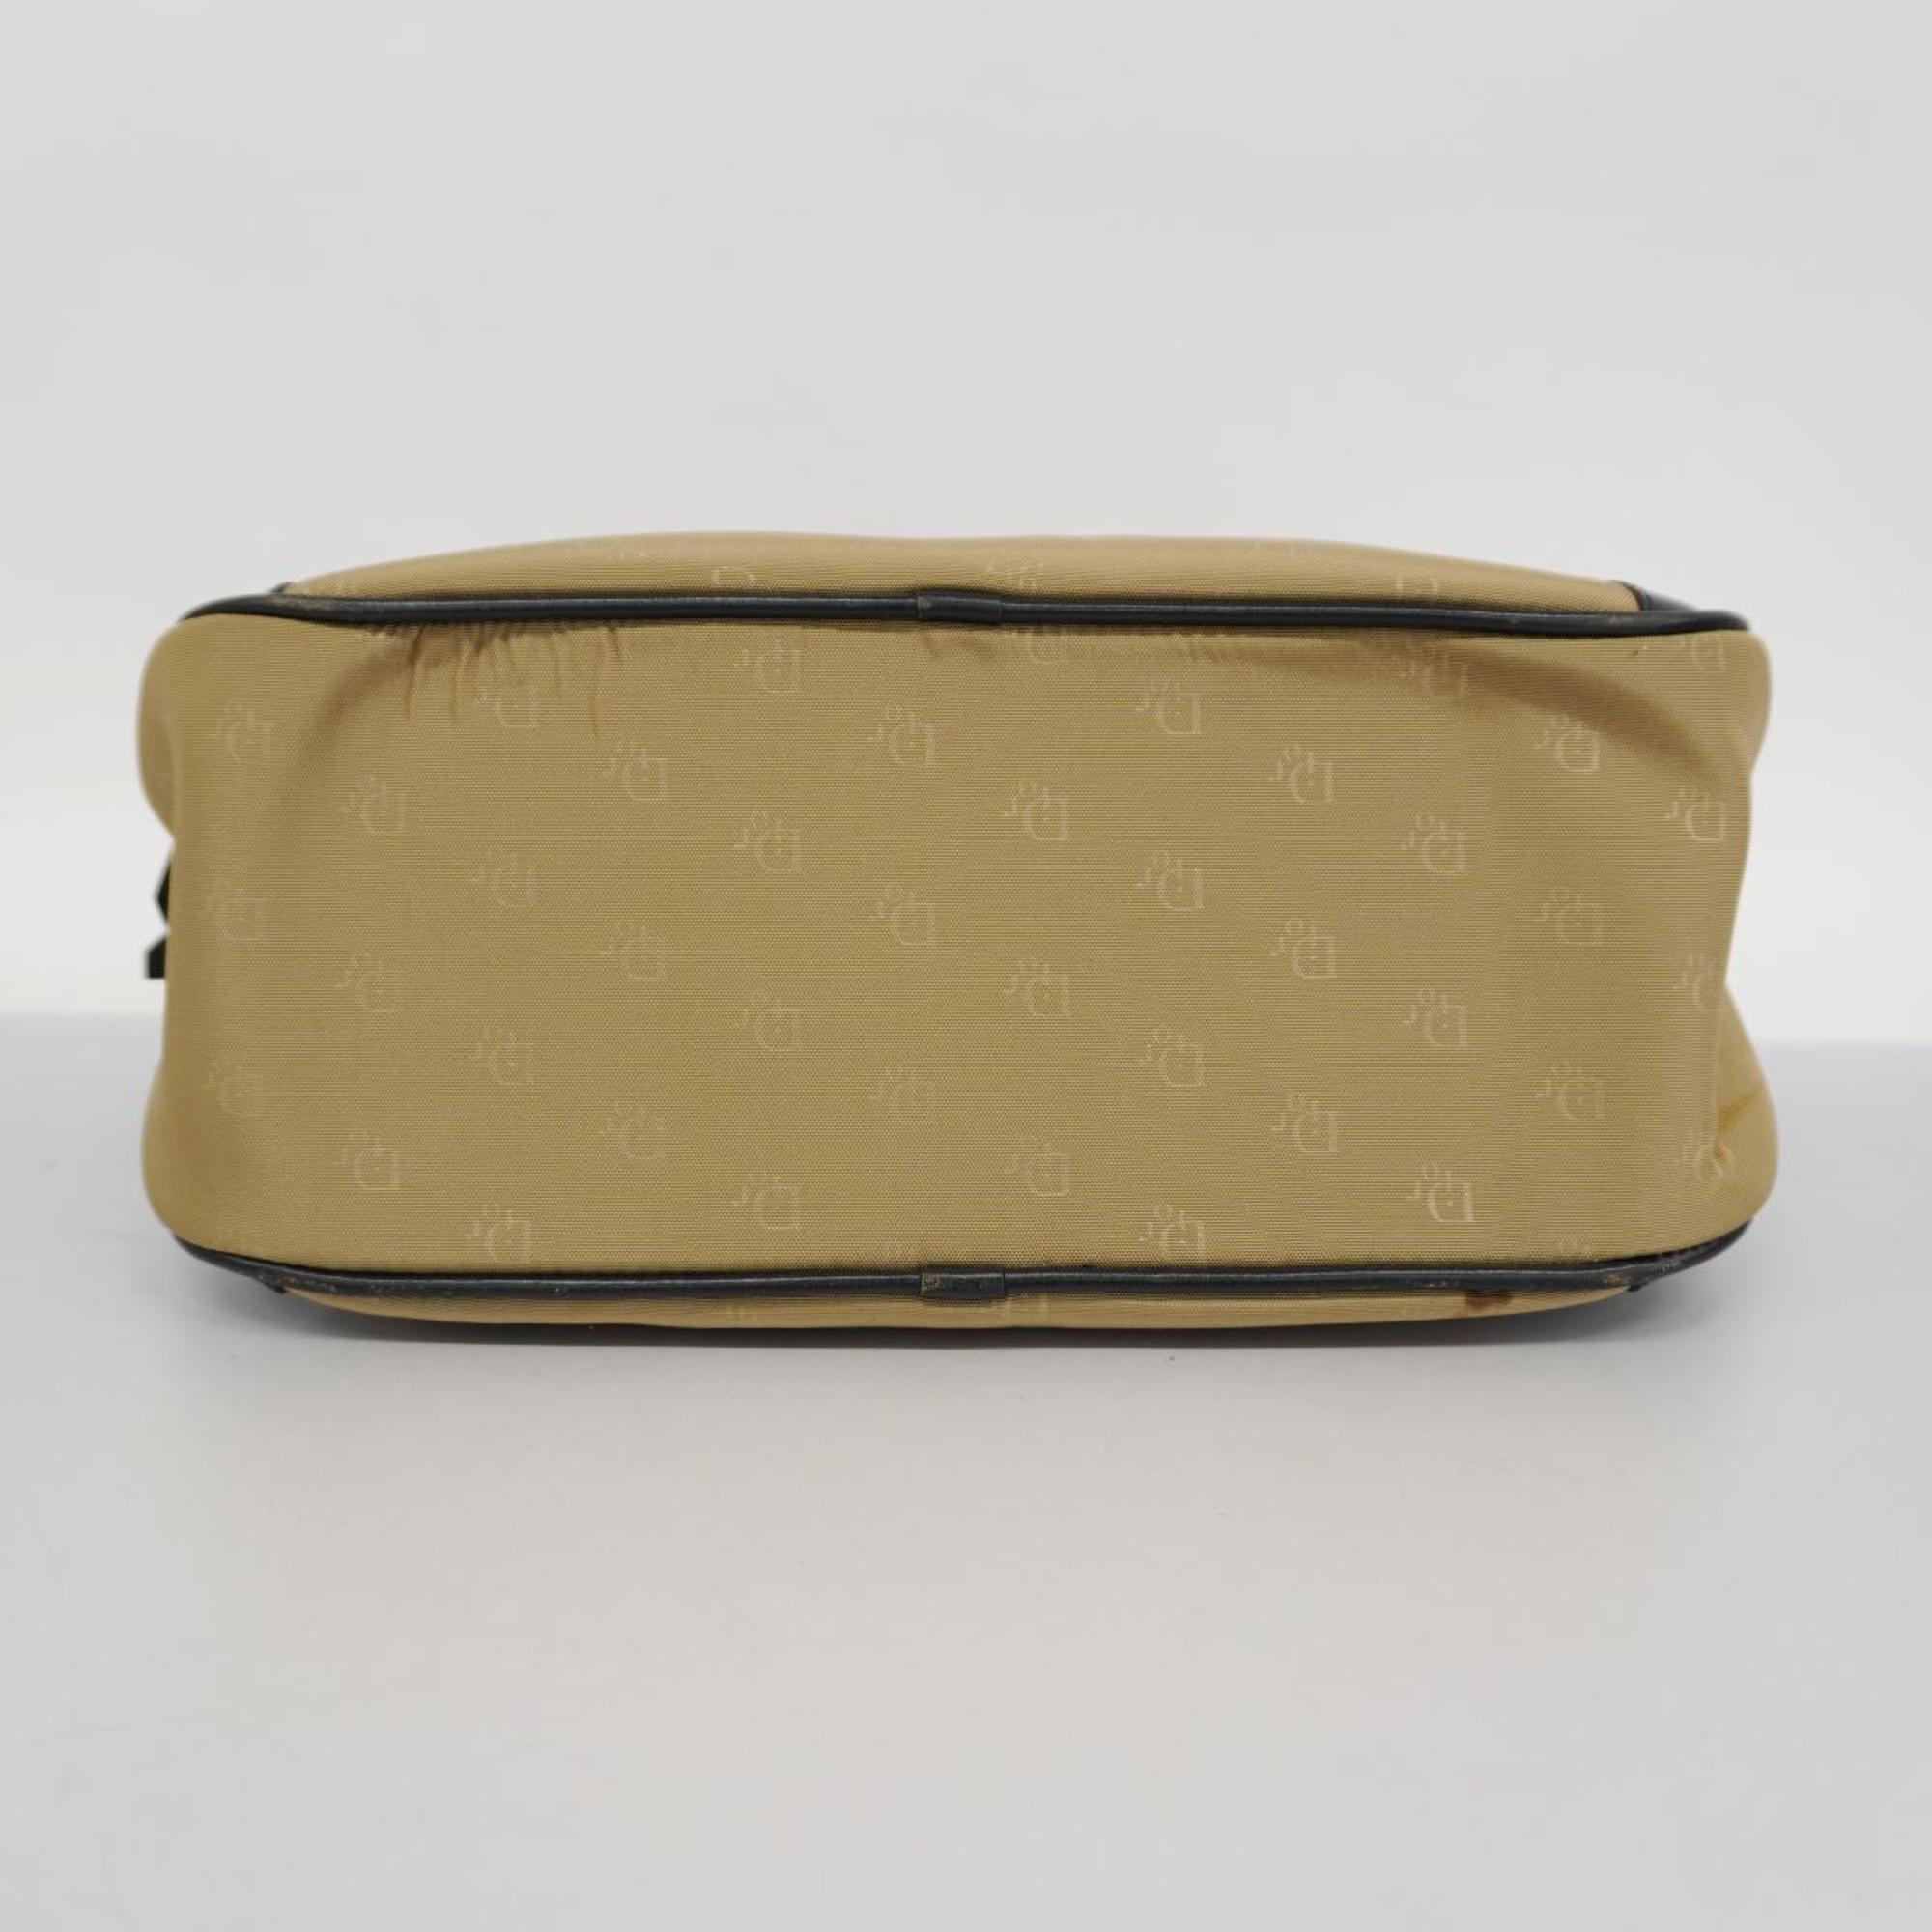 Christian Dior handbag nylon leather navy beige ladies